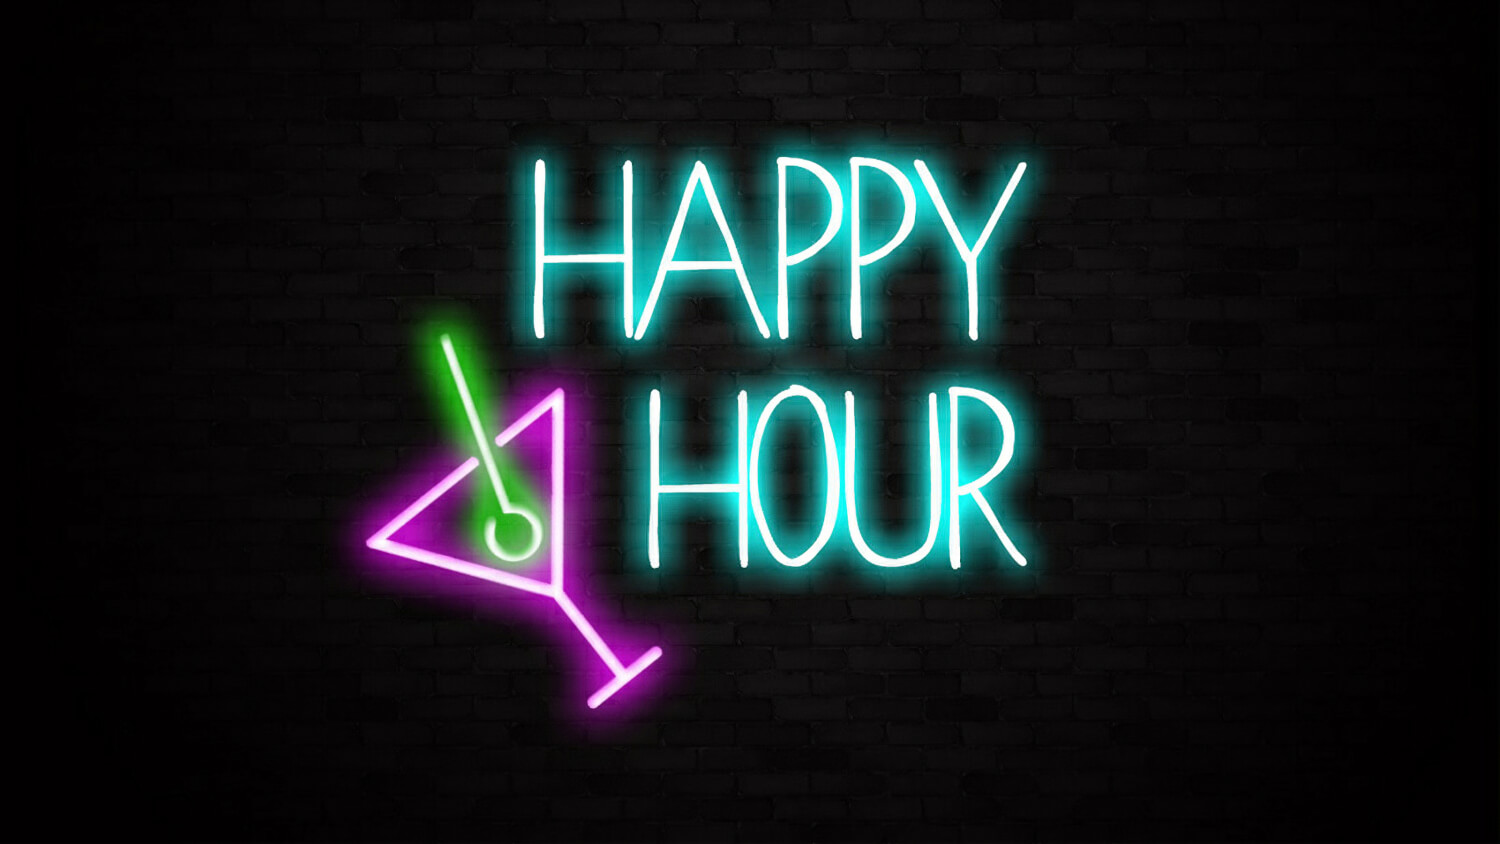 Happy Hour Neon Bar Sign